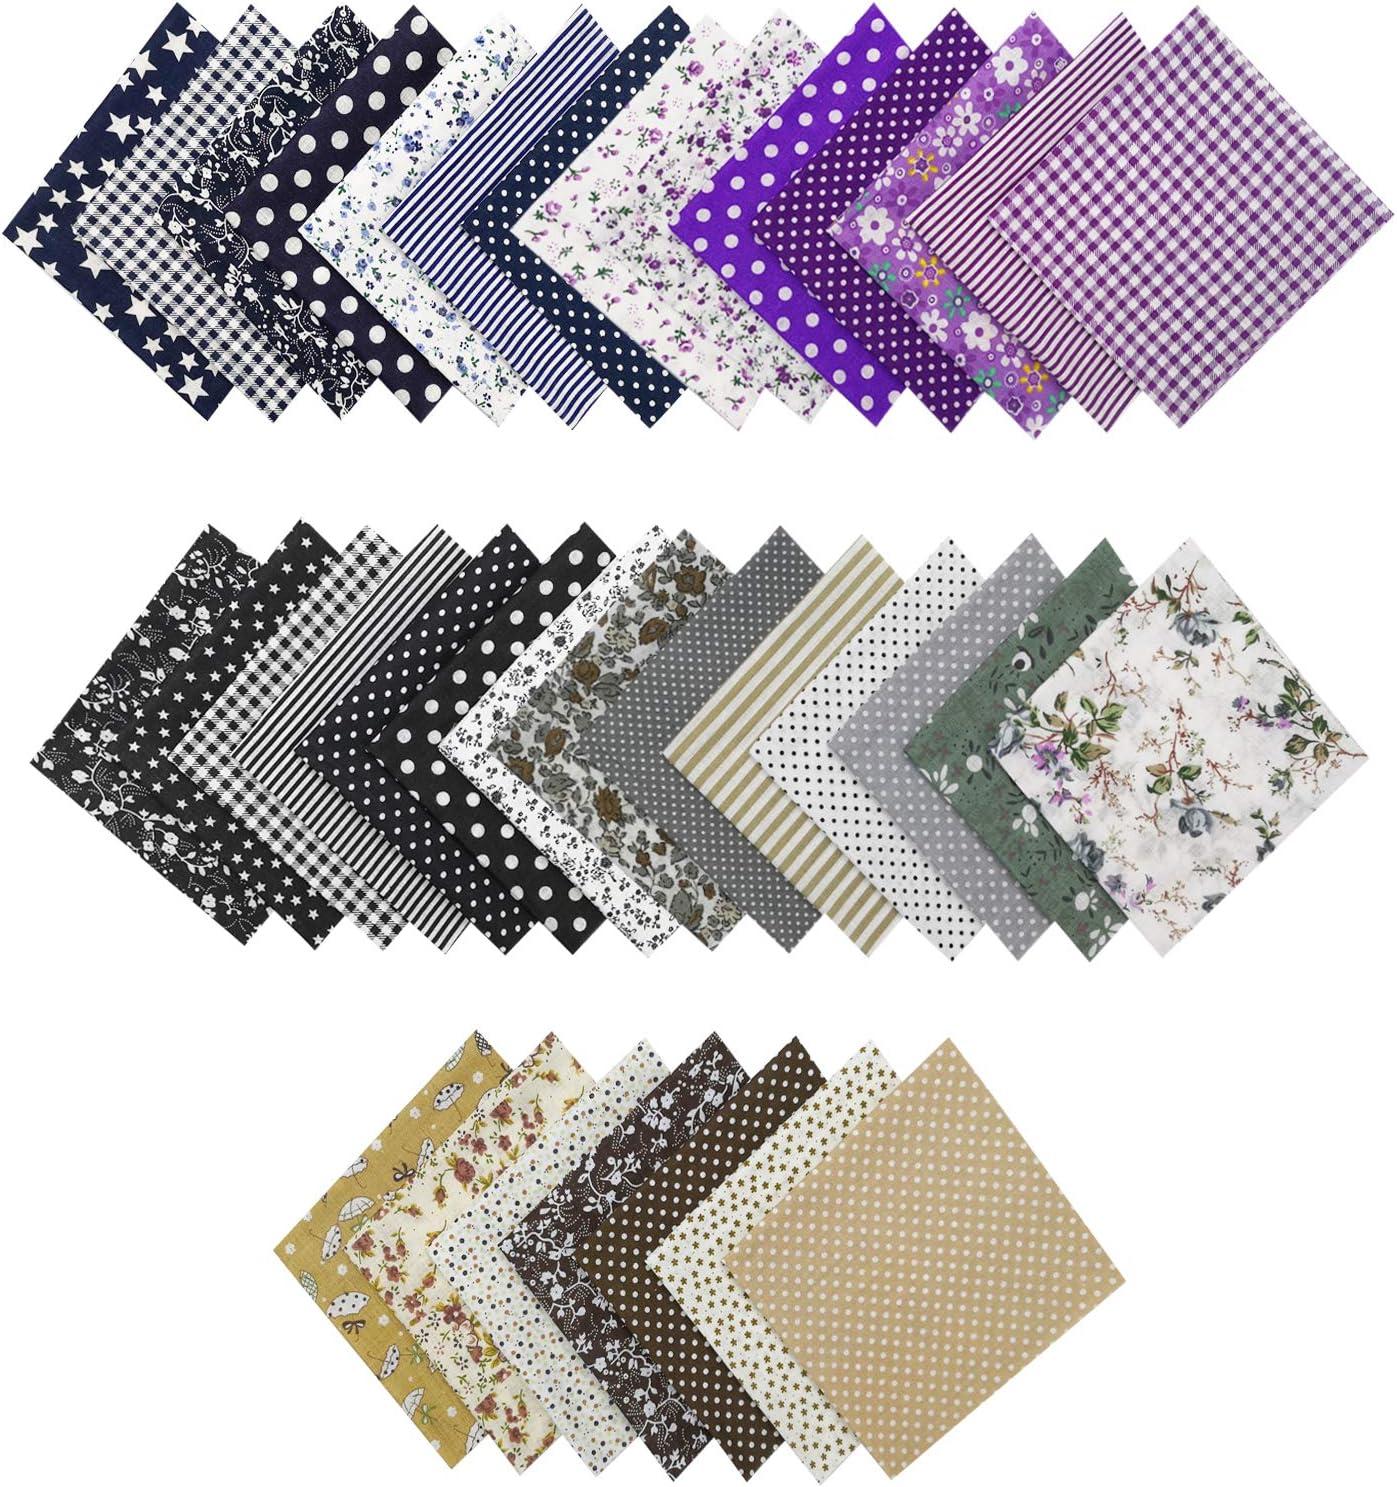 Chris.W 35Pcs Quilting Fabric Squares, 10x10 inches, UK